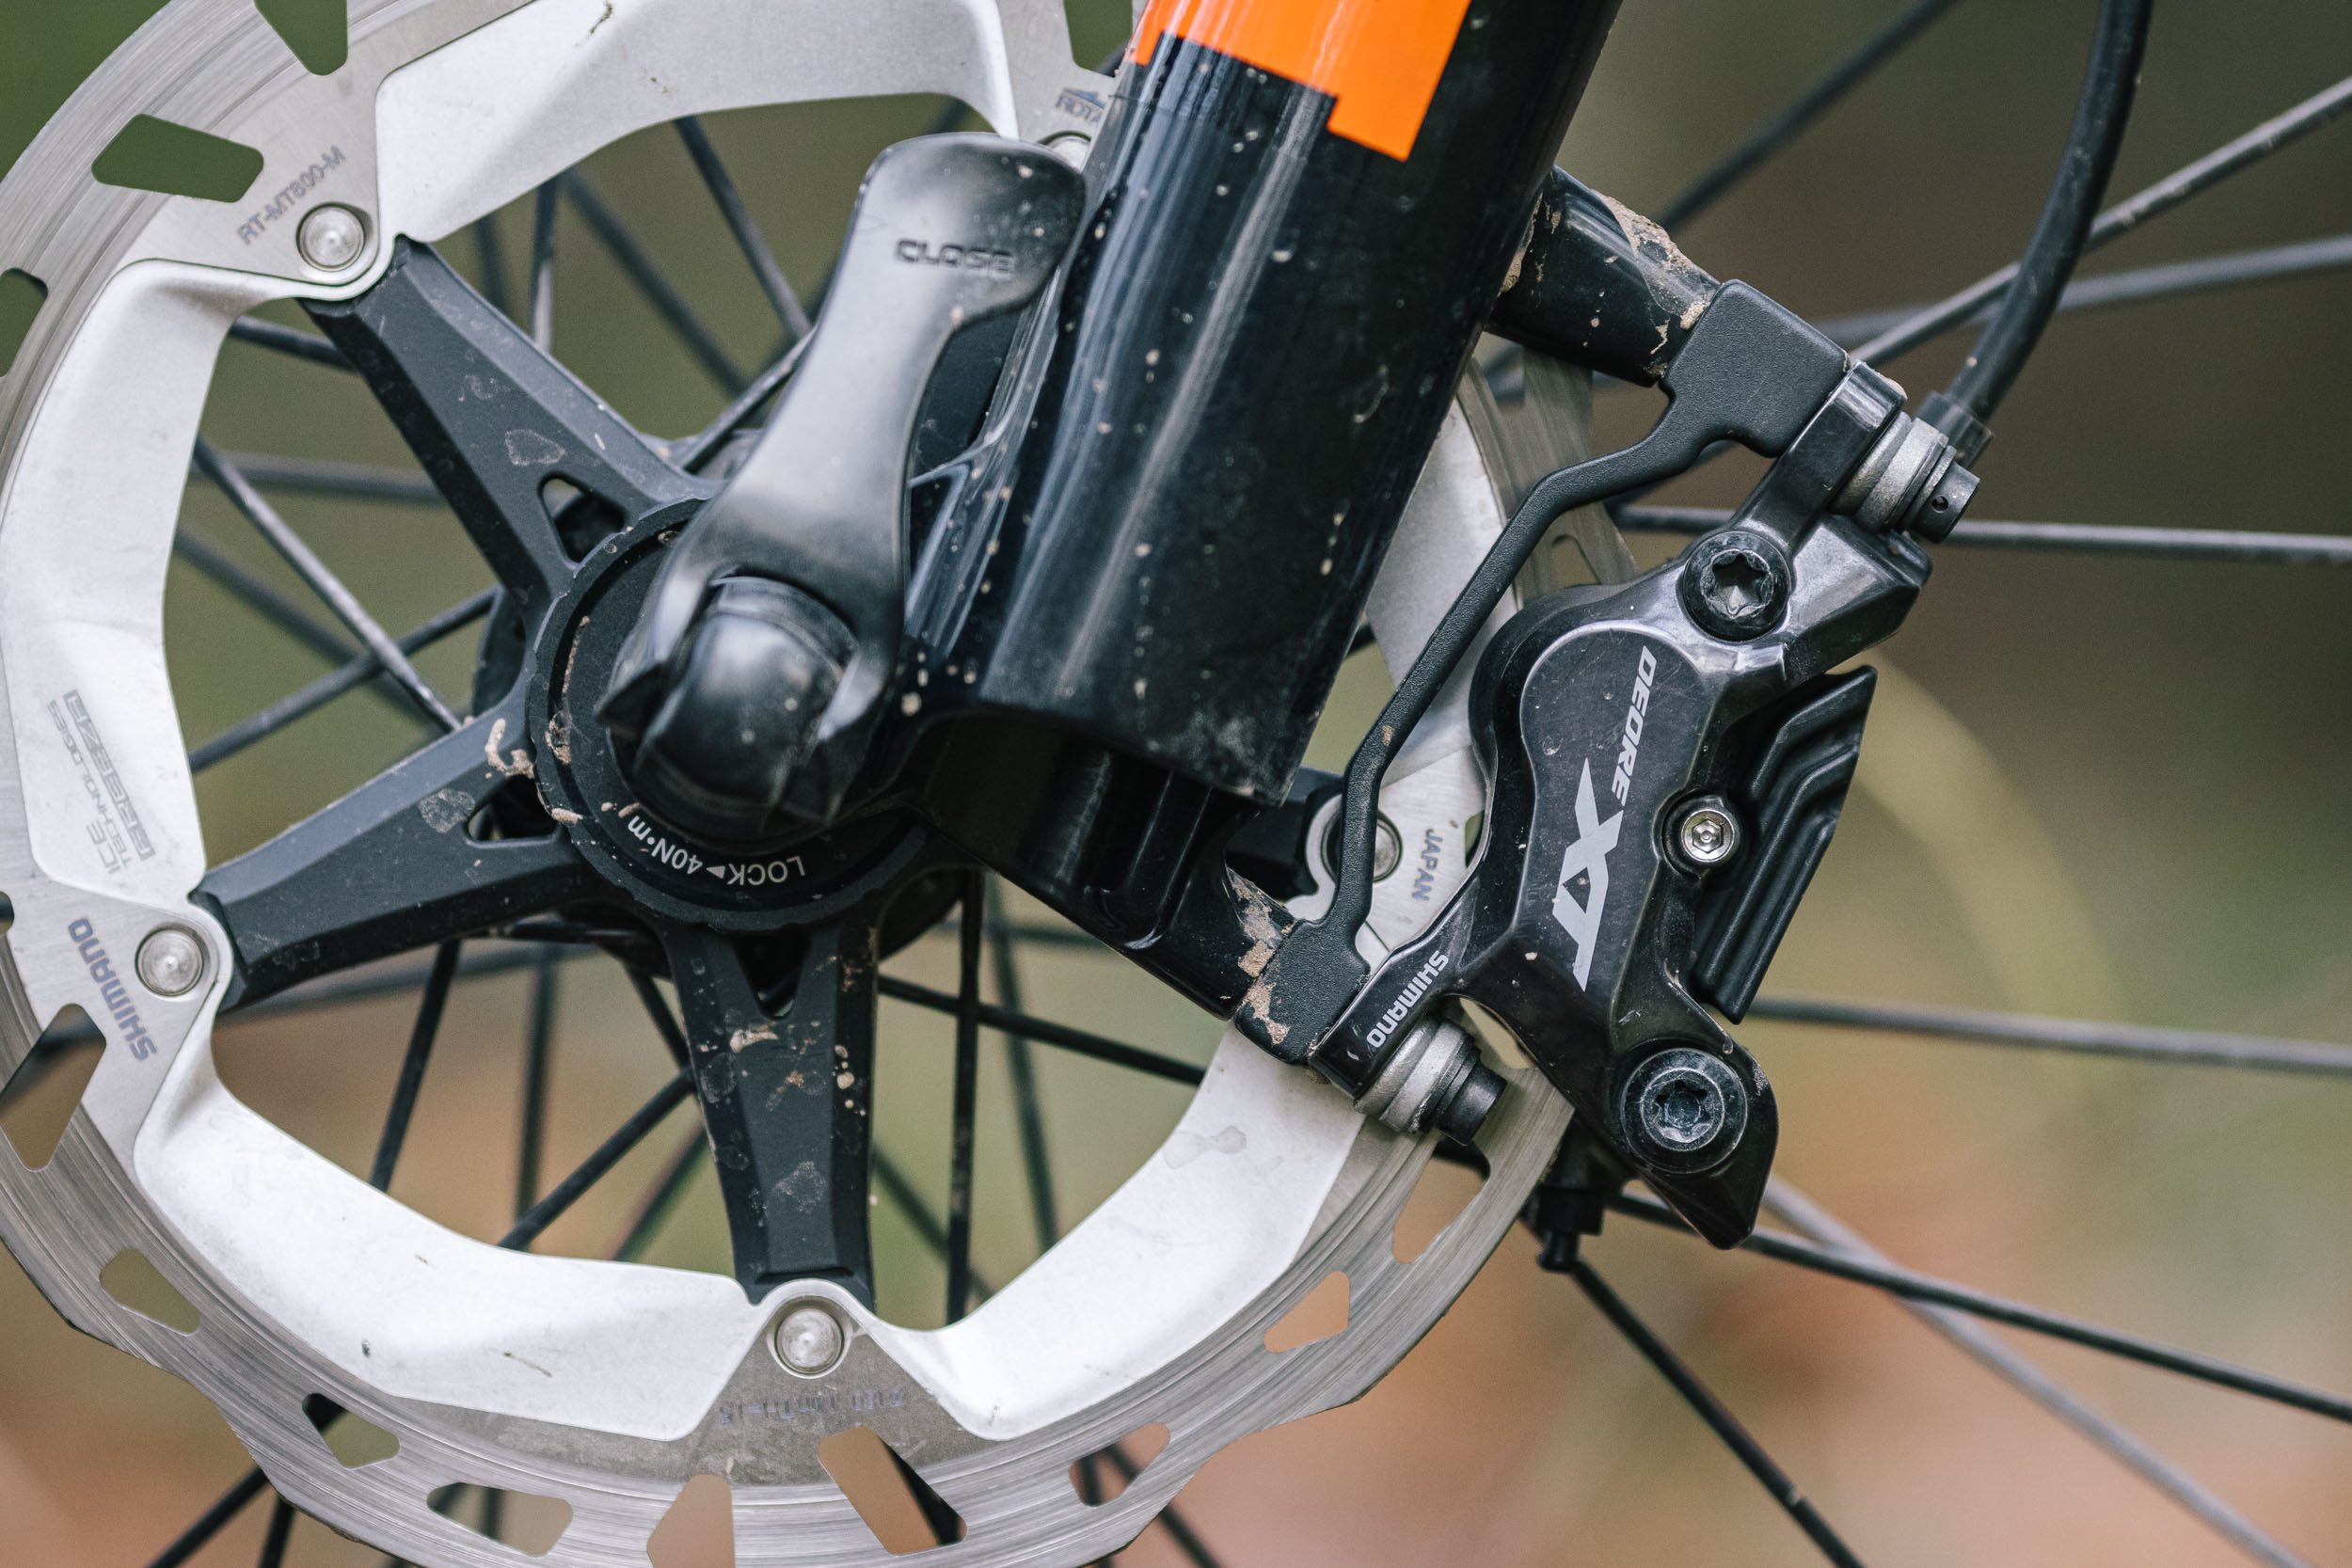 The Best Brakes for Bikepacking? Mechanical vs Hydraulic